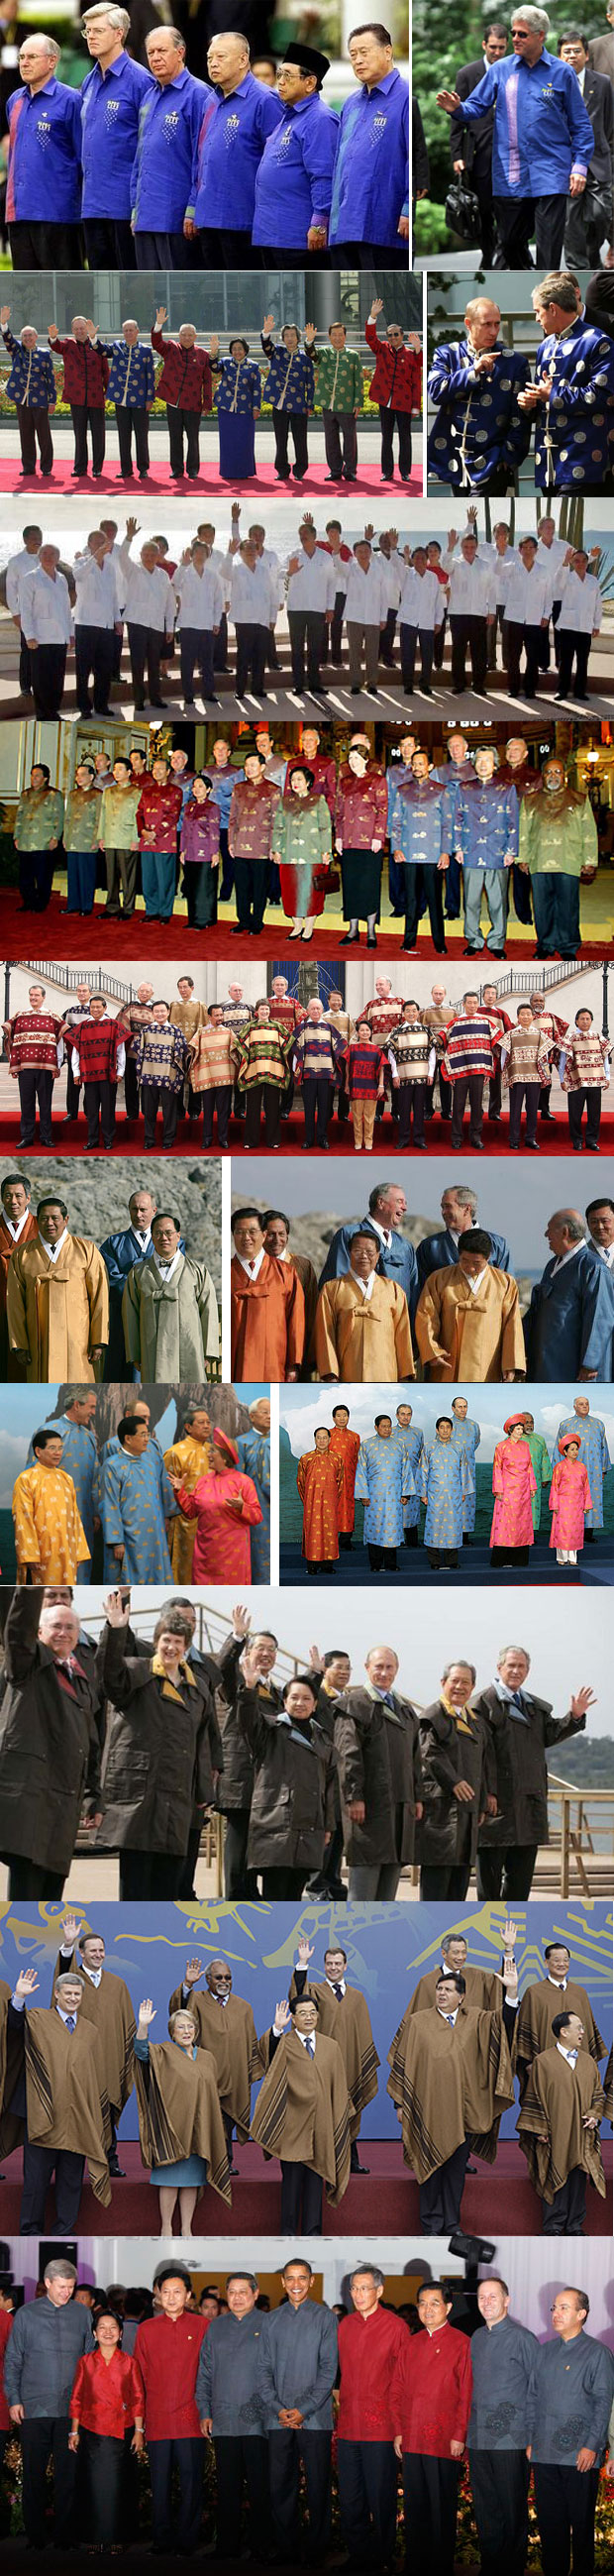 APEC leaders wearing costumes